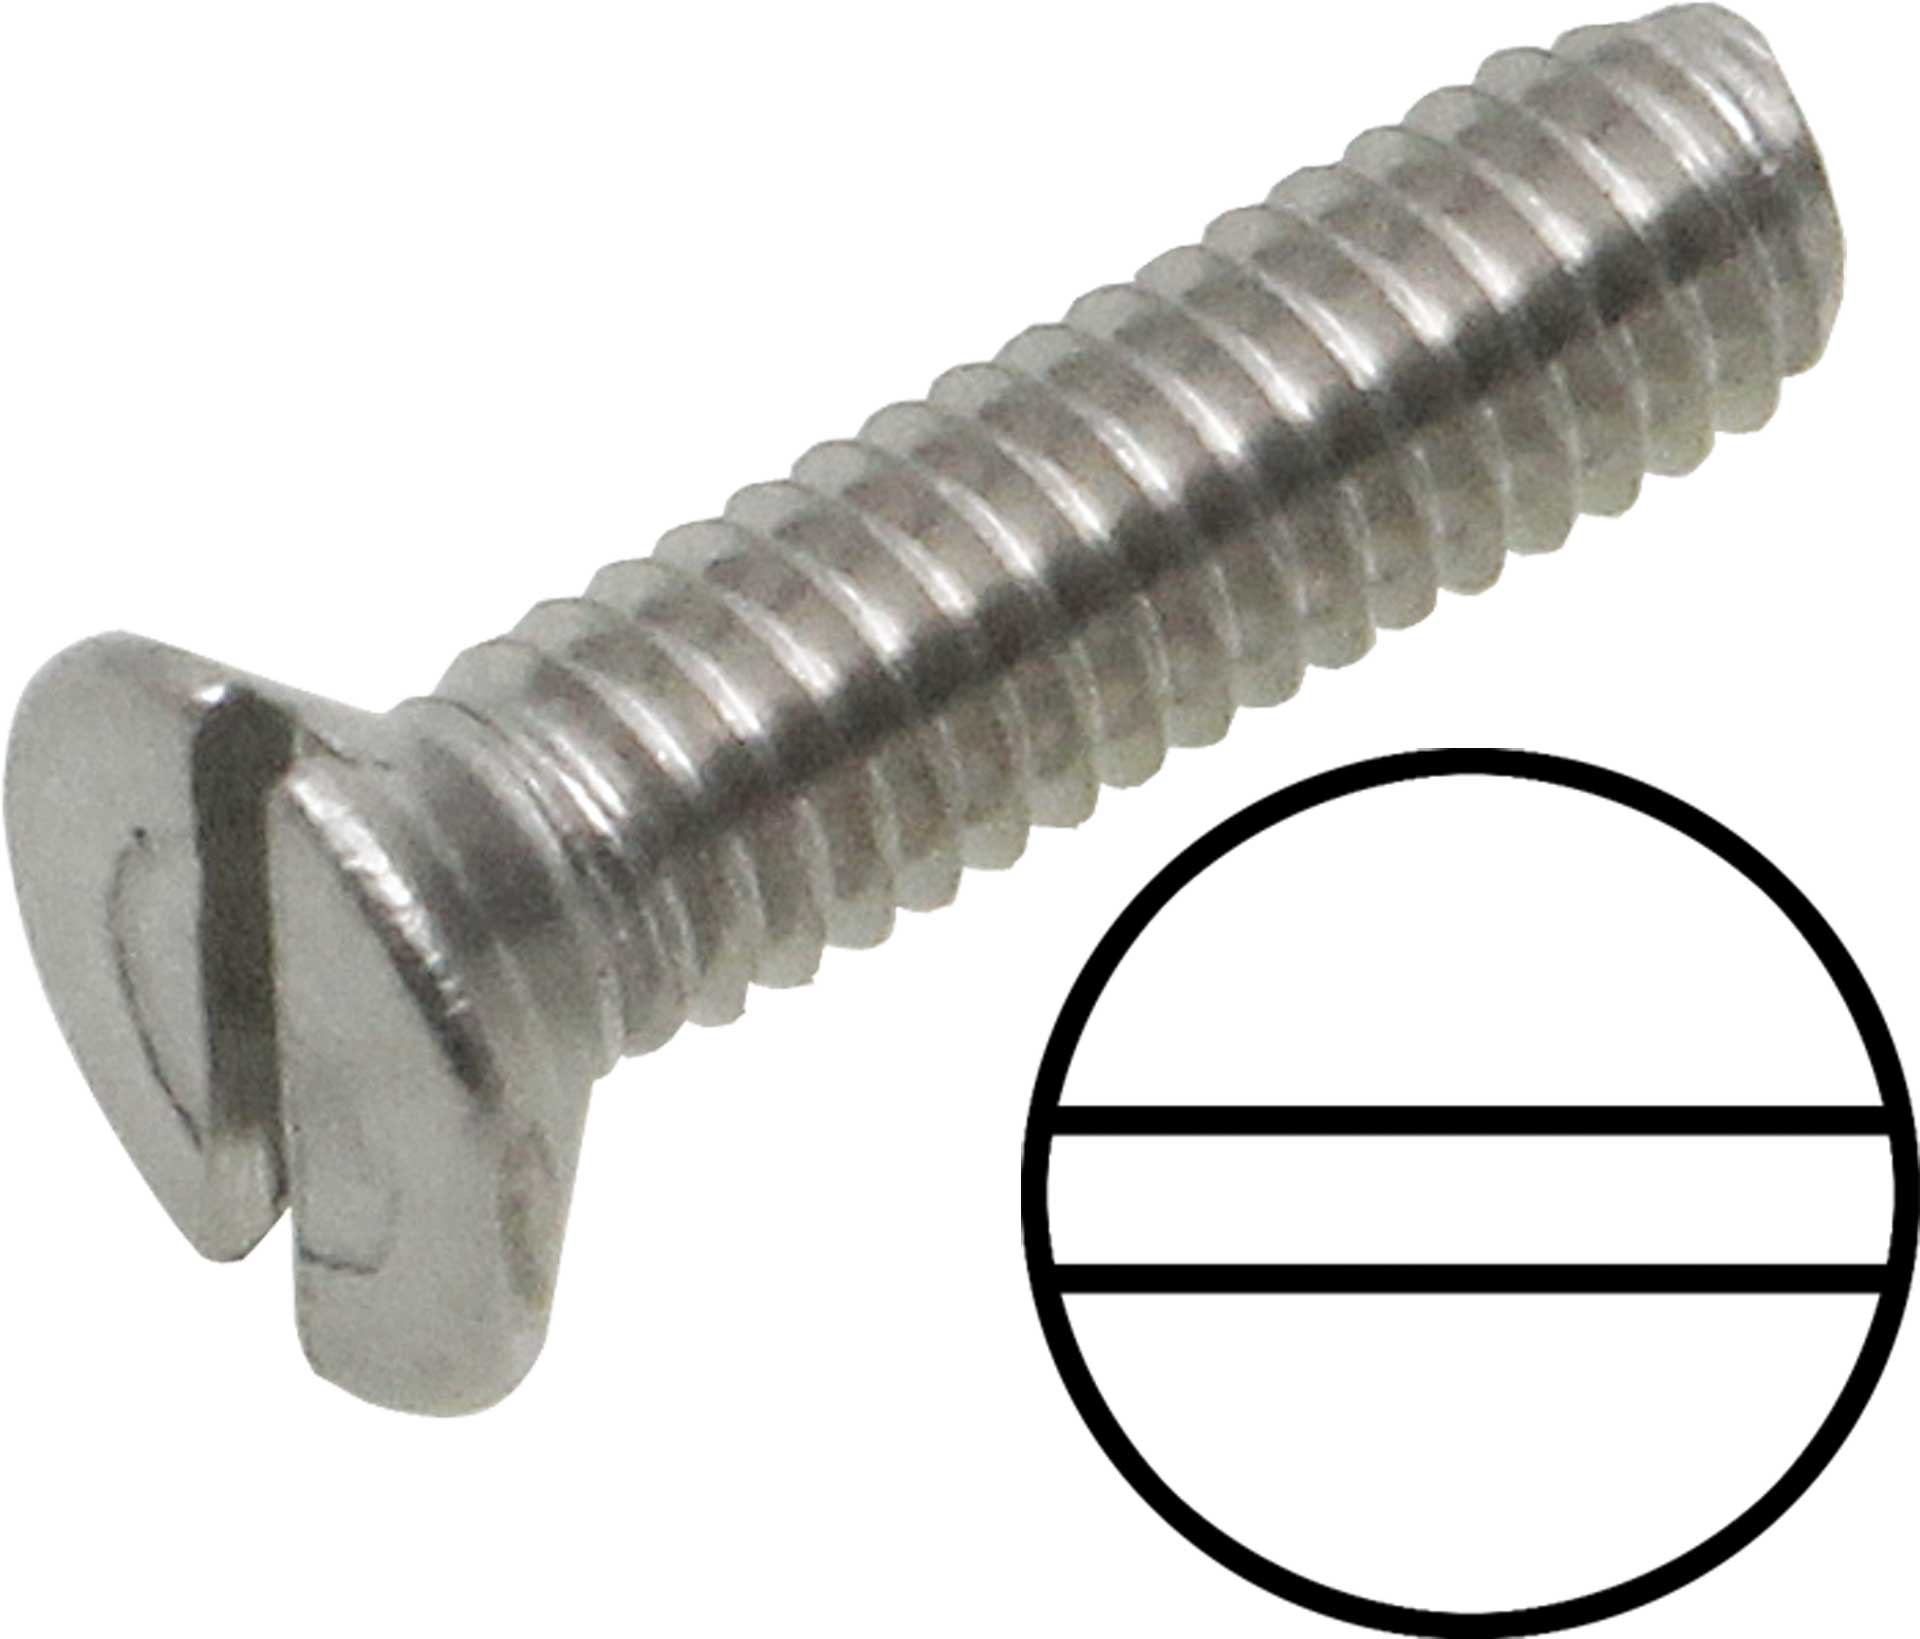 Modellbau Lindinger Countersunk head screws slotted M2.5/16mm Stainless steel, rustproof 20pcs.